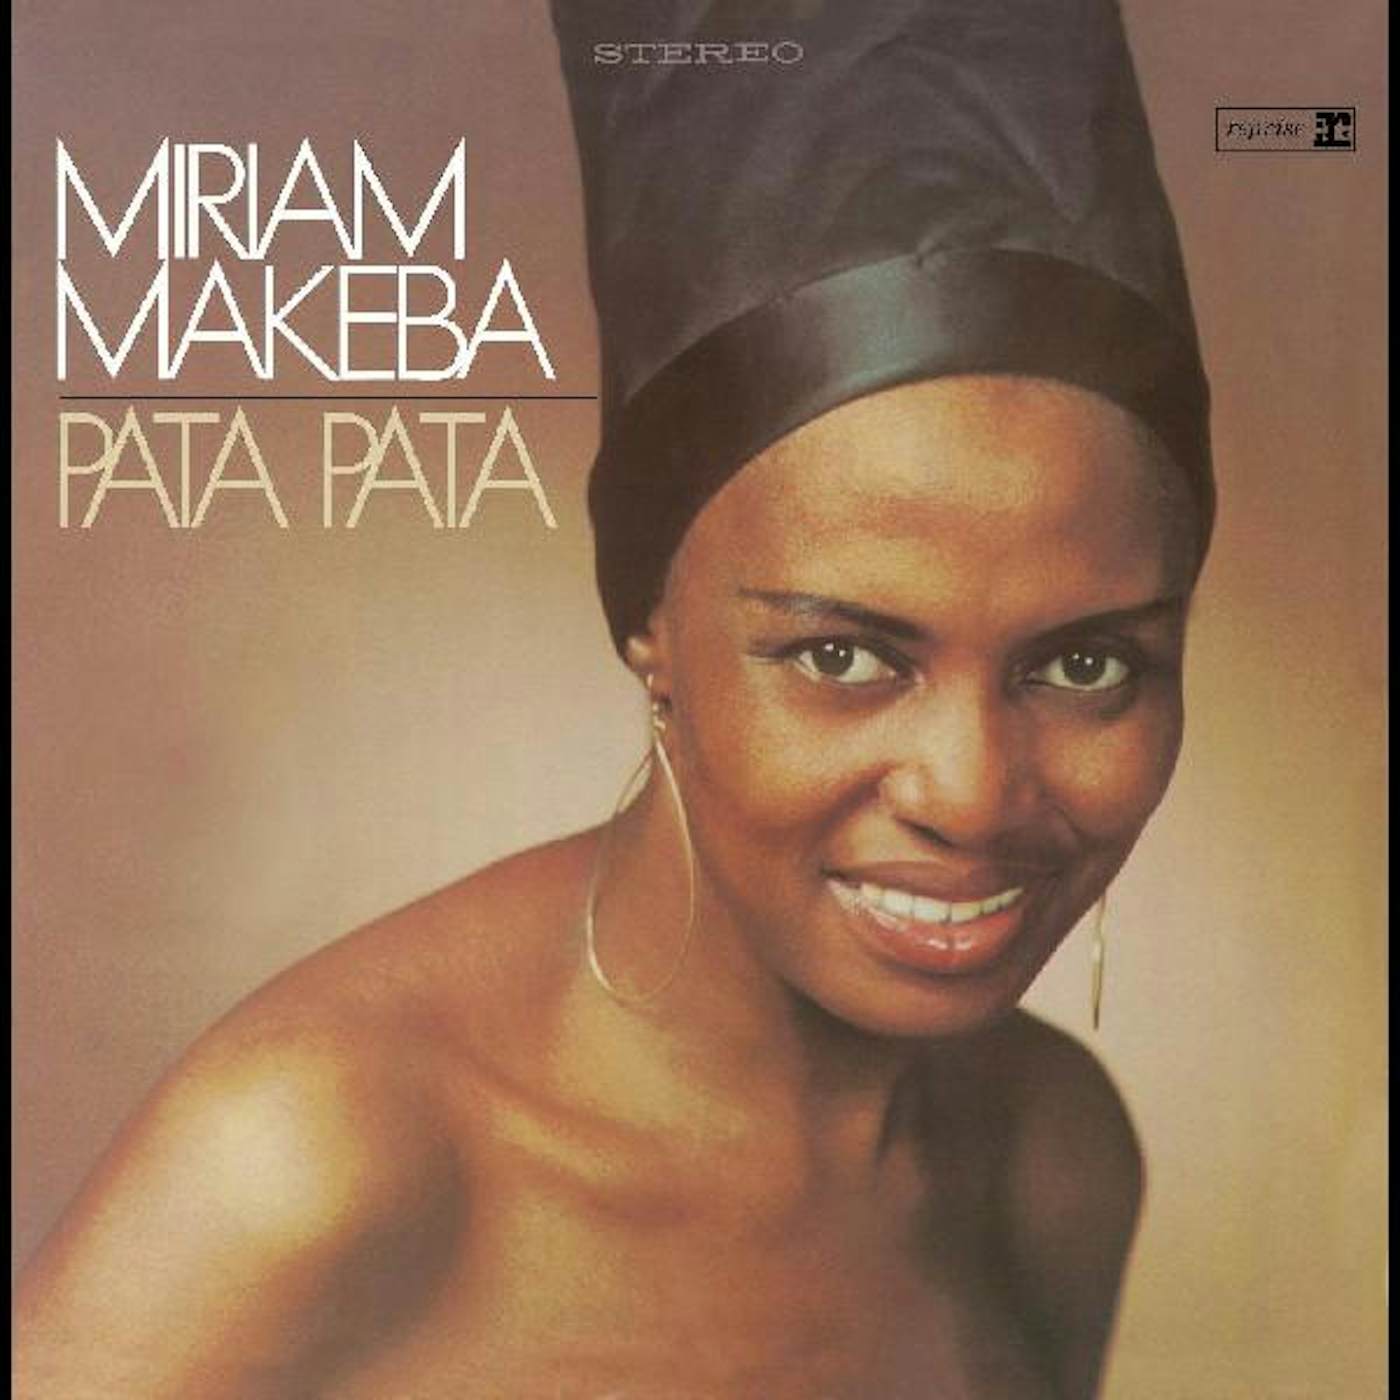 Miriam Makeba PATA PATA ( DEFINITIVE REMASTERED EDITION) CD